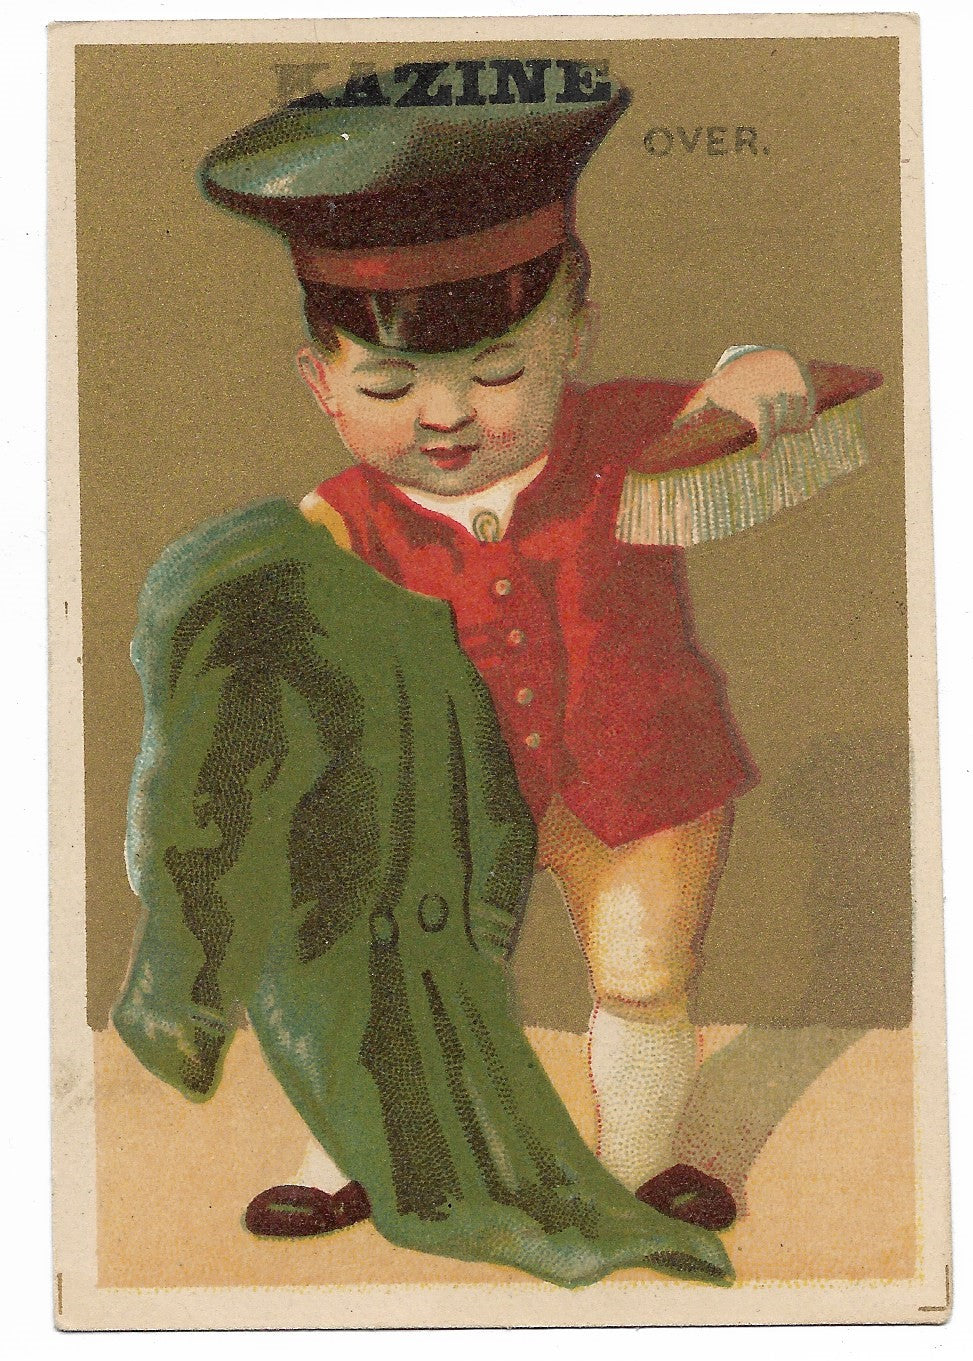 Kazine Washing Powder (Baby Doorman) Antique Trade Card - 3" x 4.5"